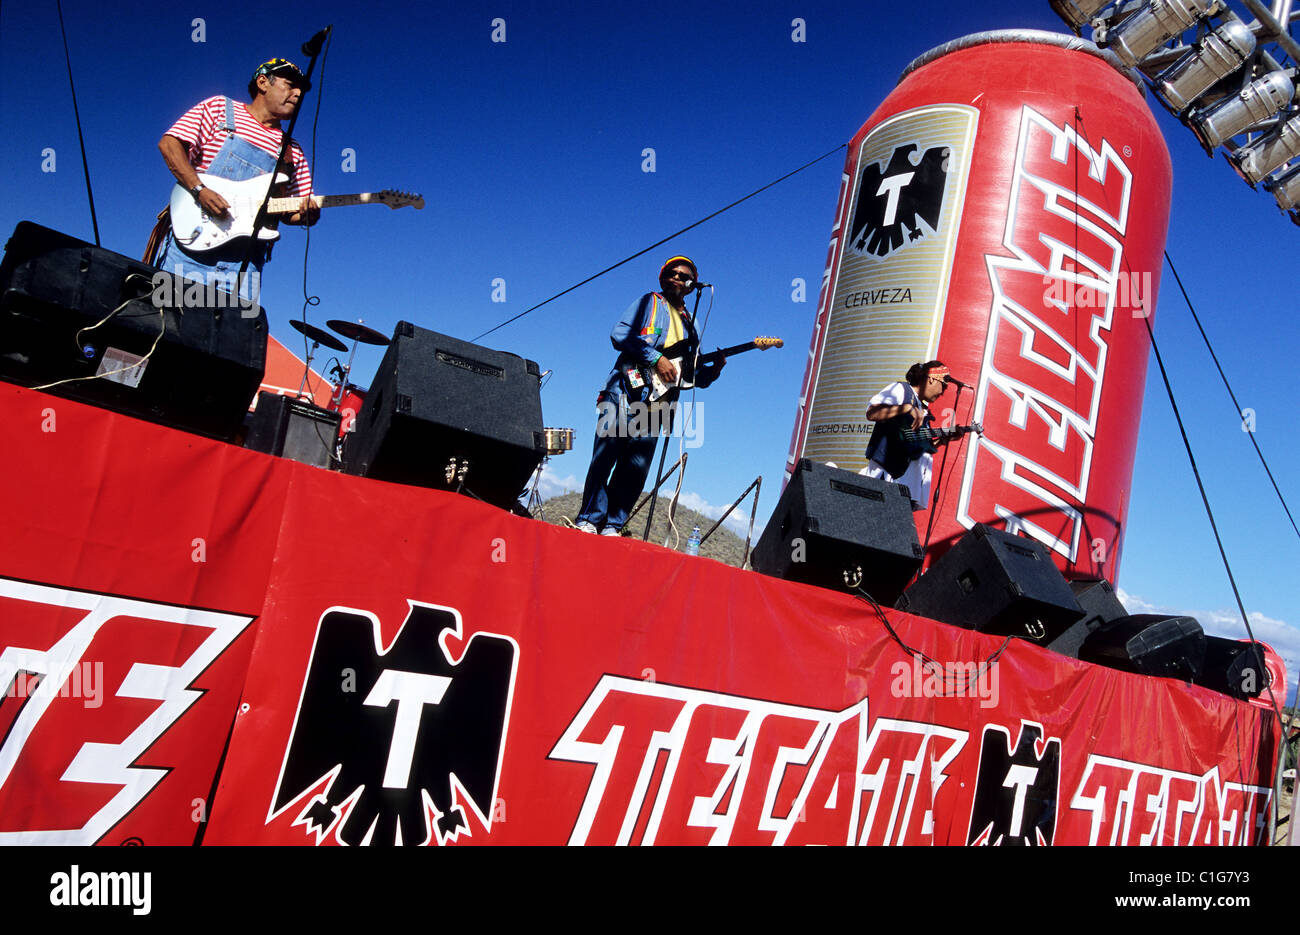 Mexico, Baja California state, reggae concert sponsorised by the beer Tecate in Pescadero Stock Photo